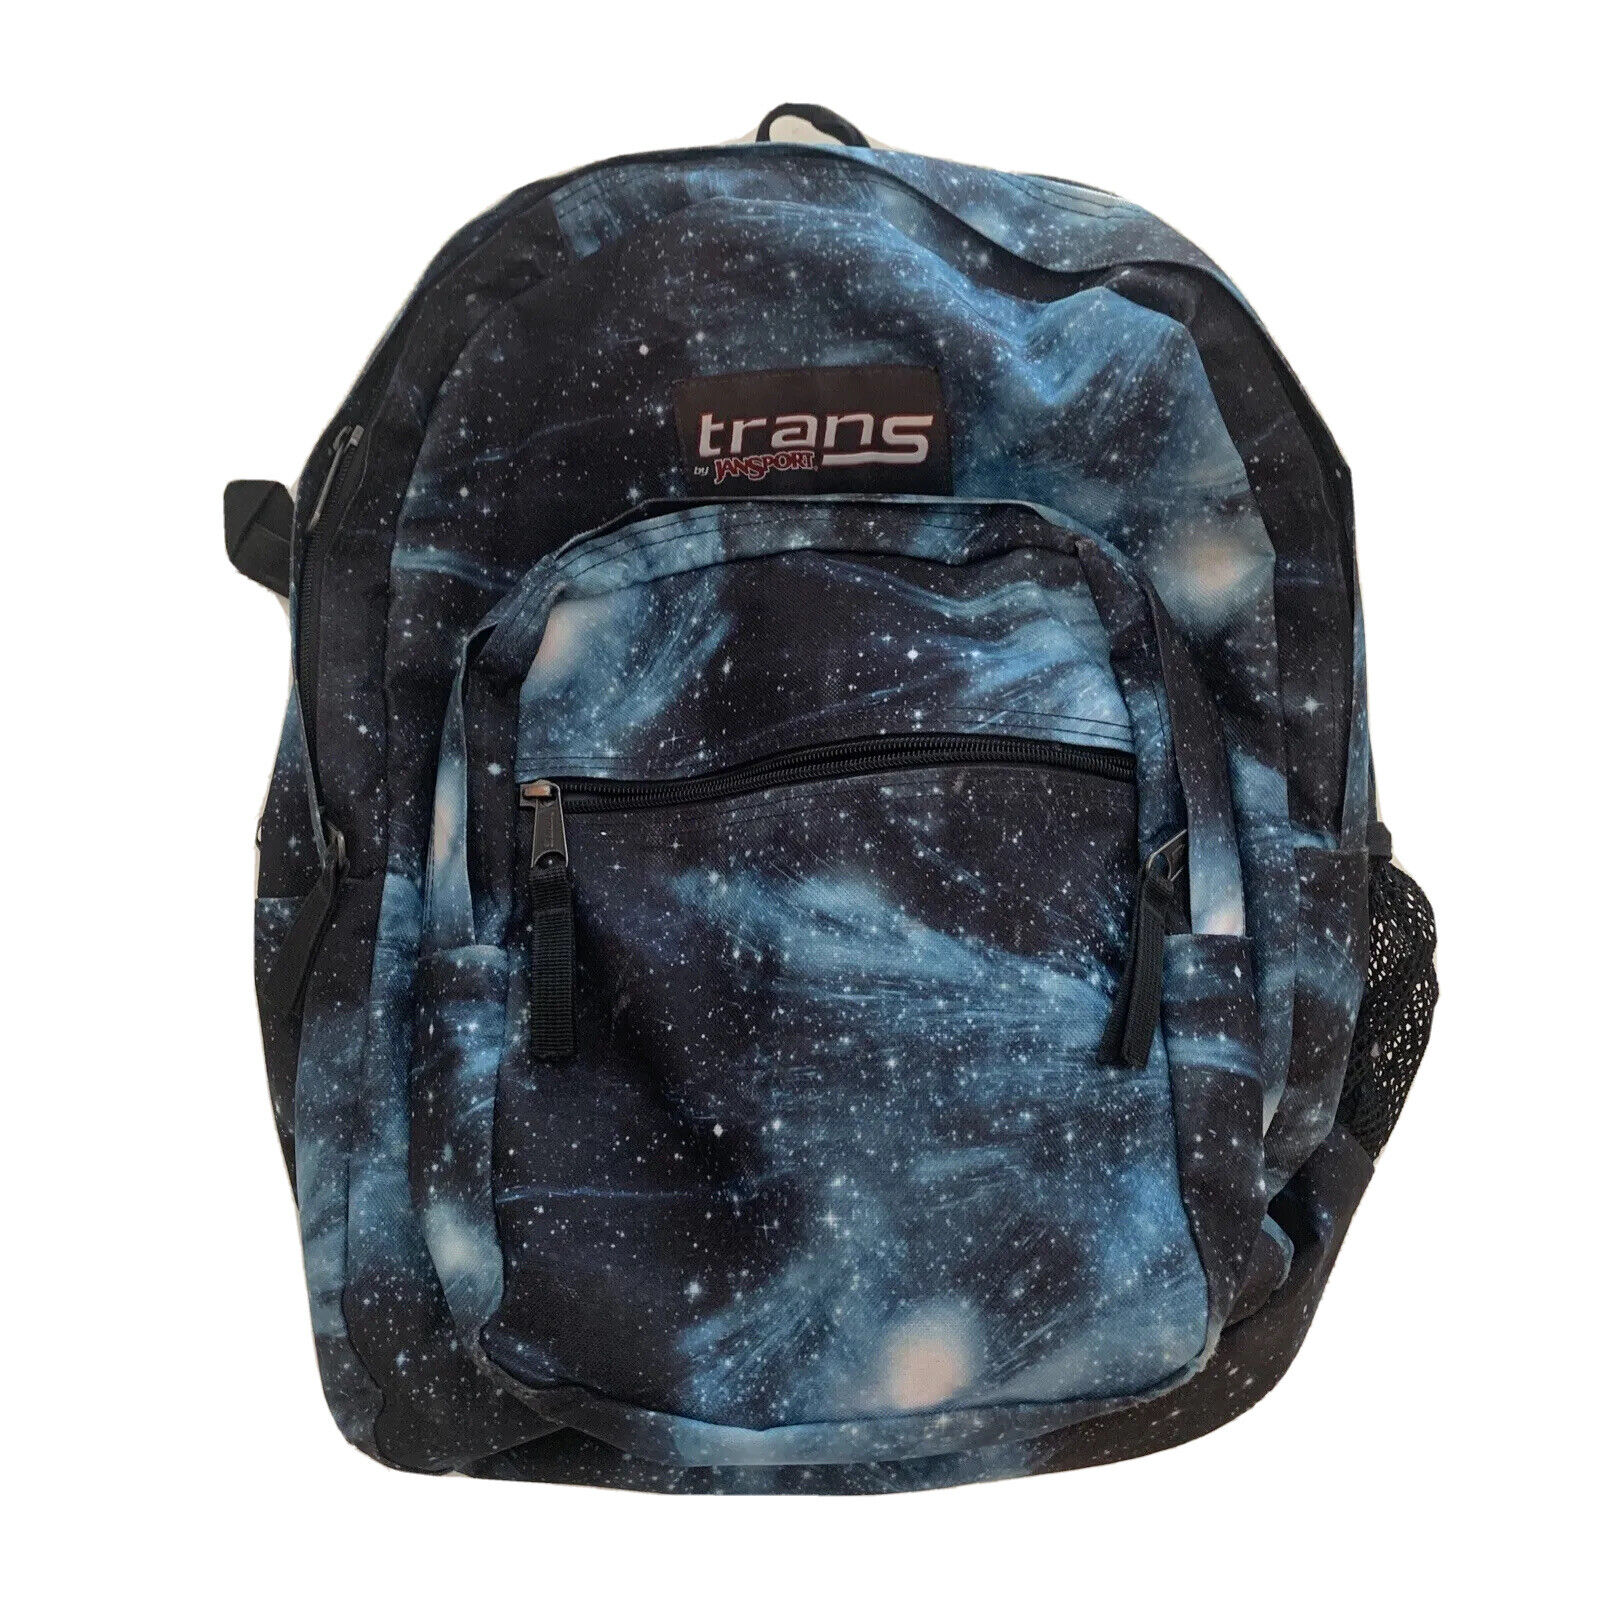 JanSport Trans SuperMax Backpack Laptop Sleeve Cosmos Galaxy Space Blue School